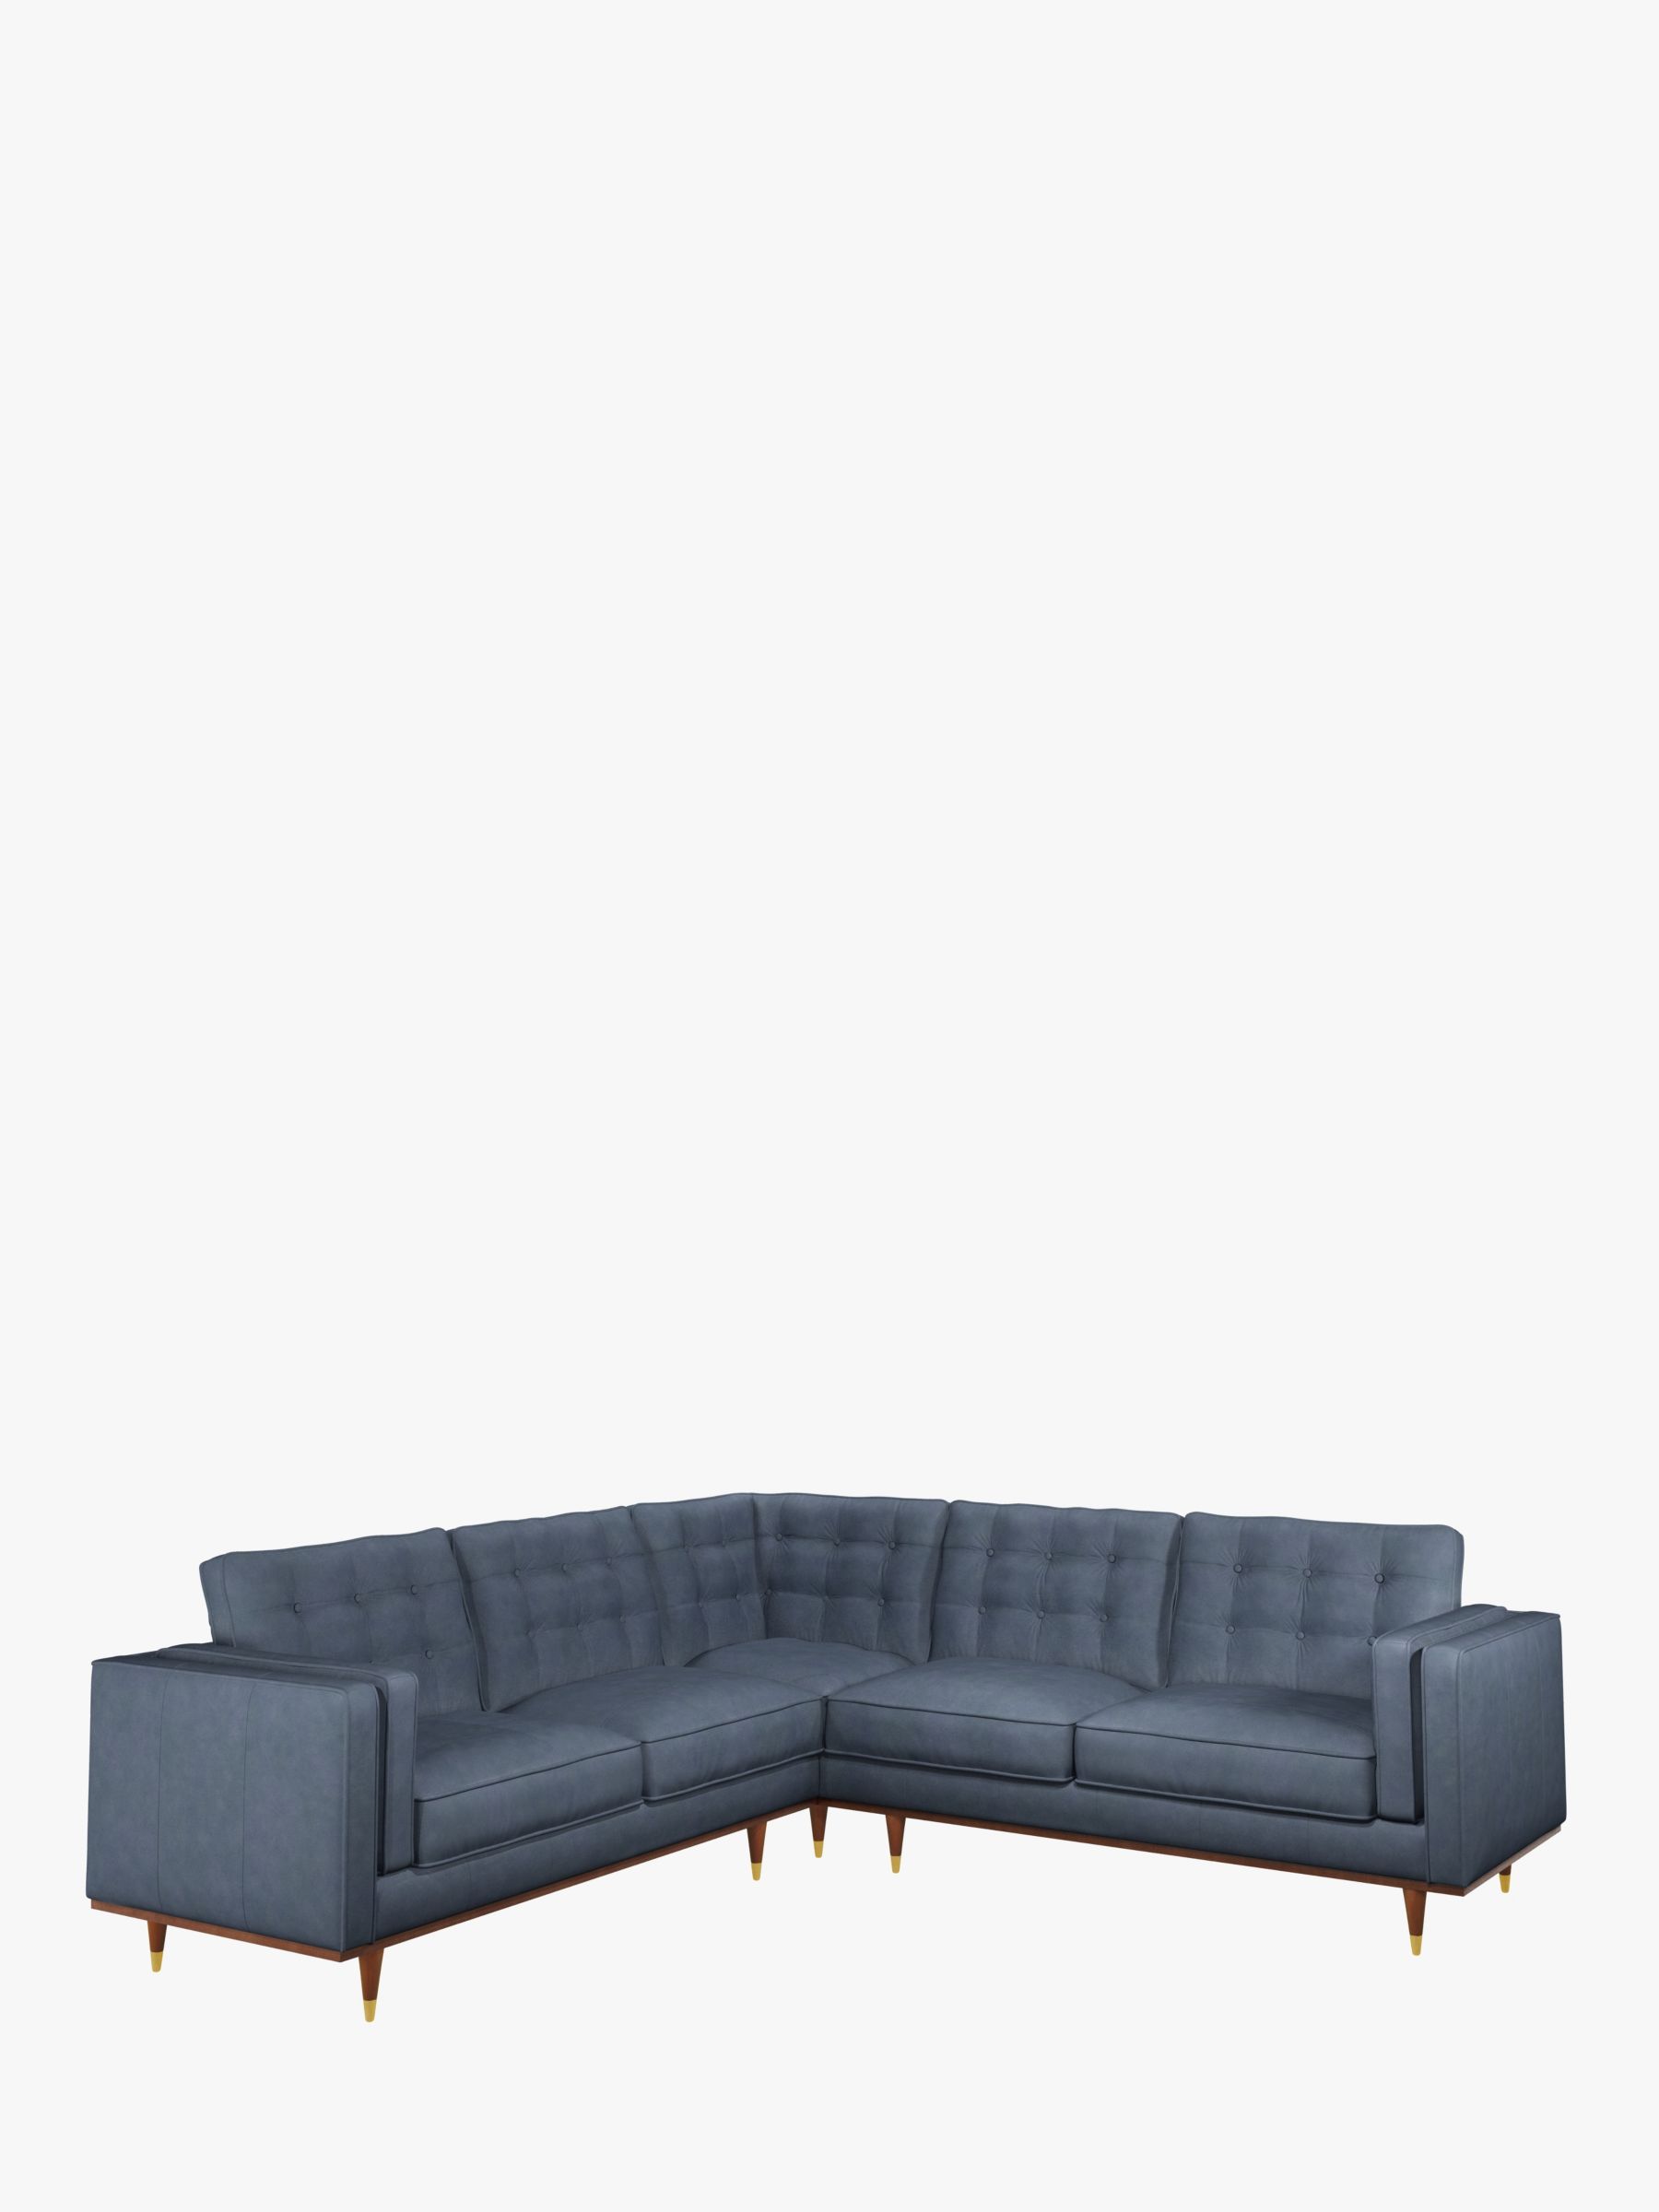 Photo of John lewis + swoon lyon large 5+ seater leather corner sofa